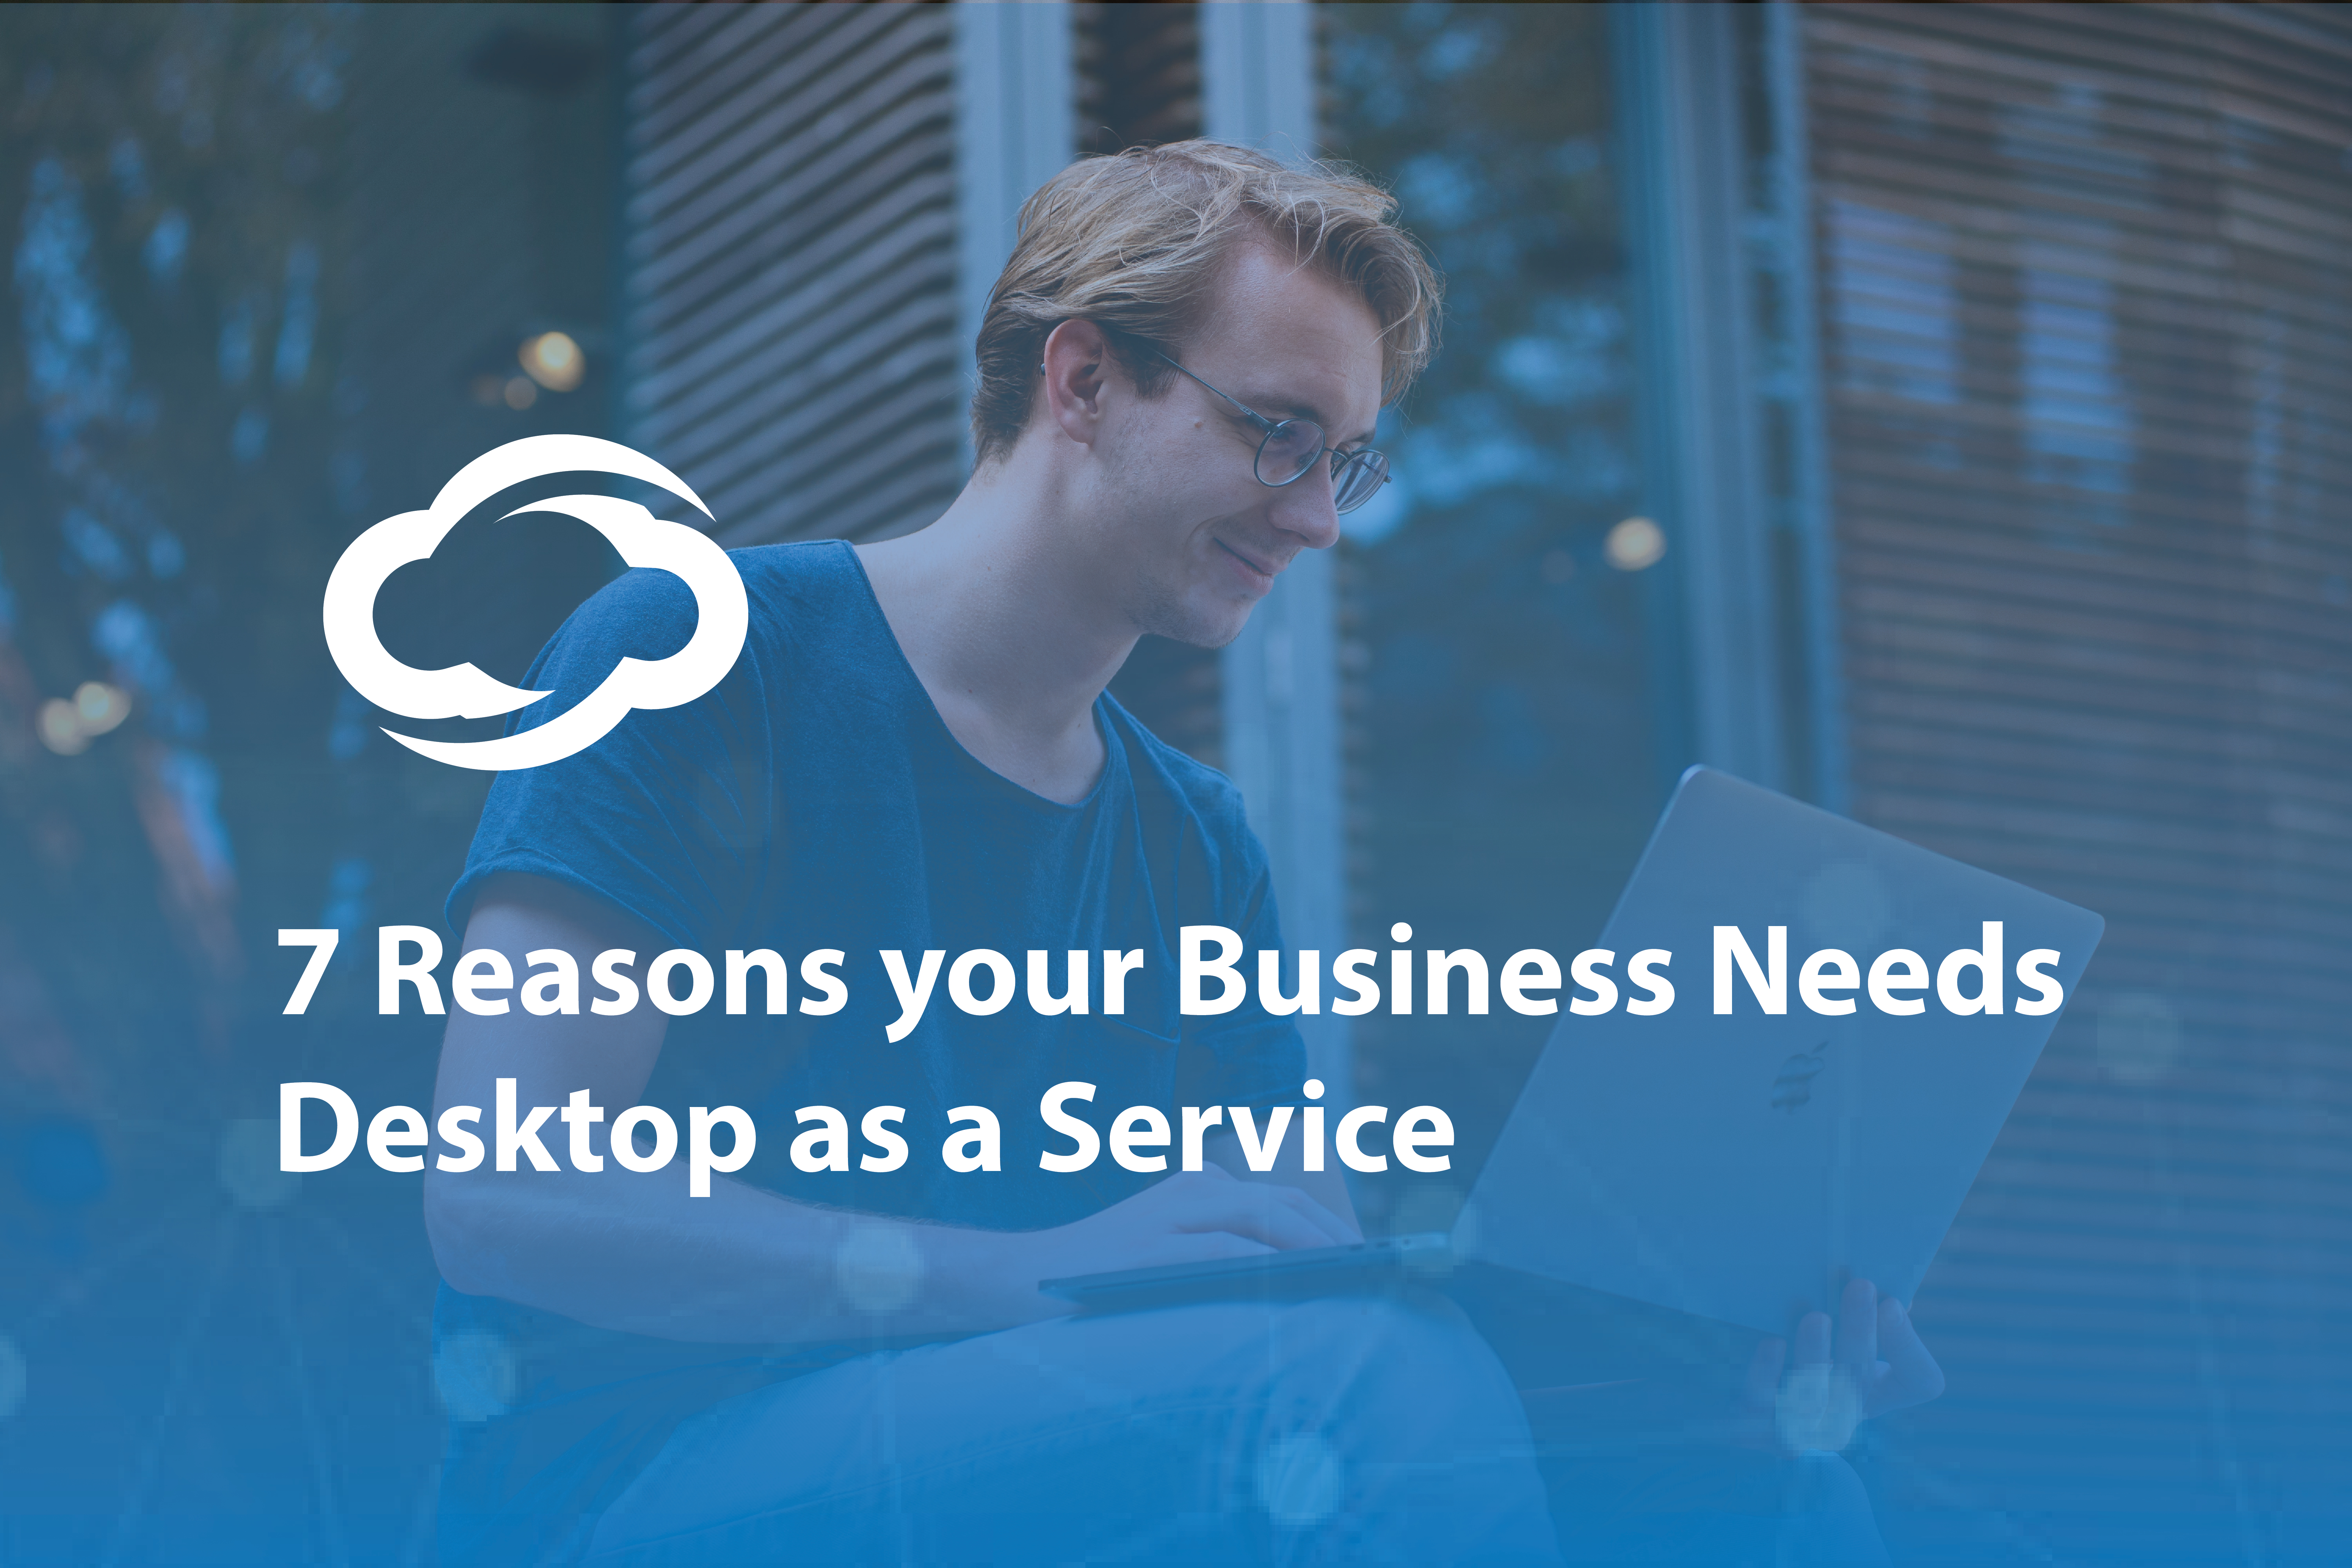 Blog Image - 7 Reasons your Business Needs Desktop as a Service